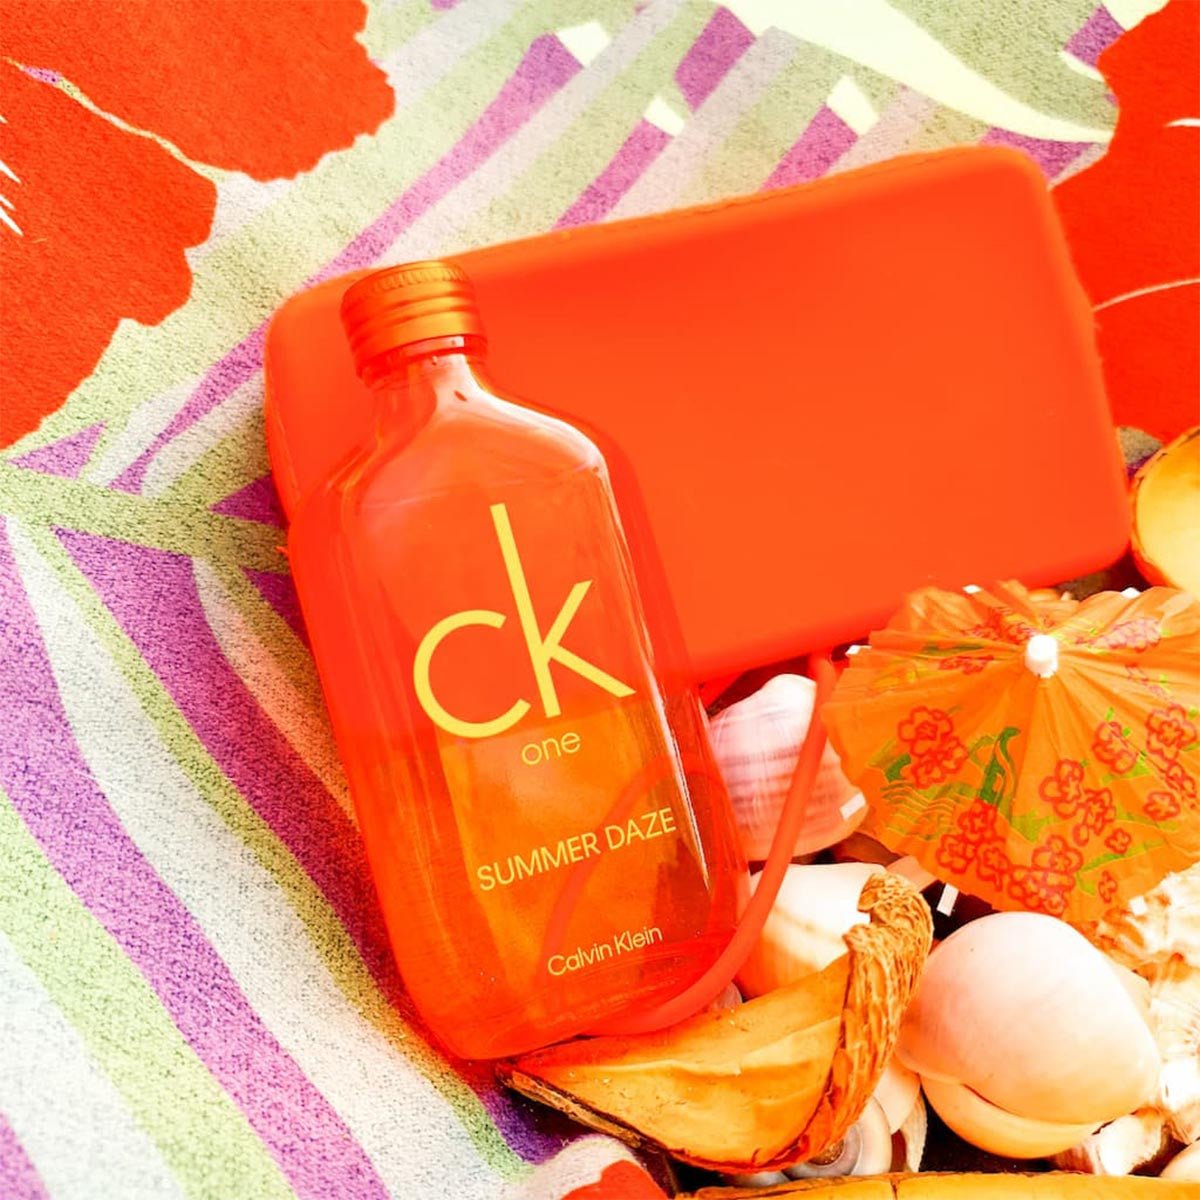 CK One Summer Daze by Calvin Klein » Reviews & Perfume Facts